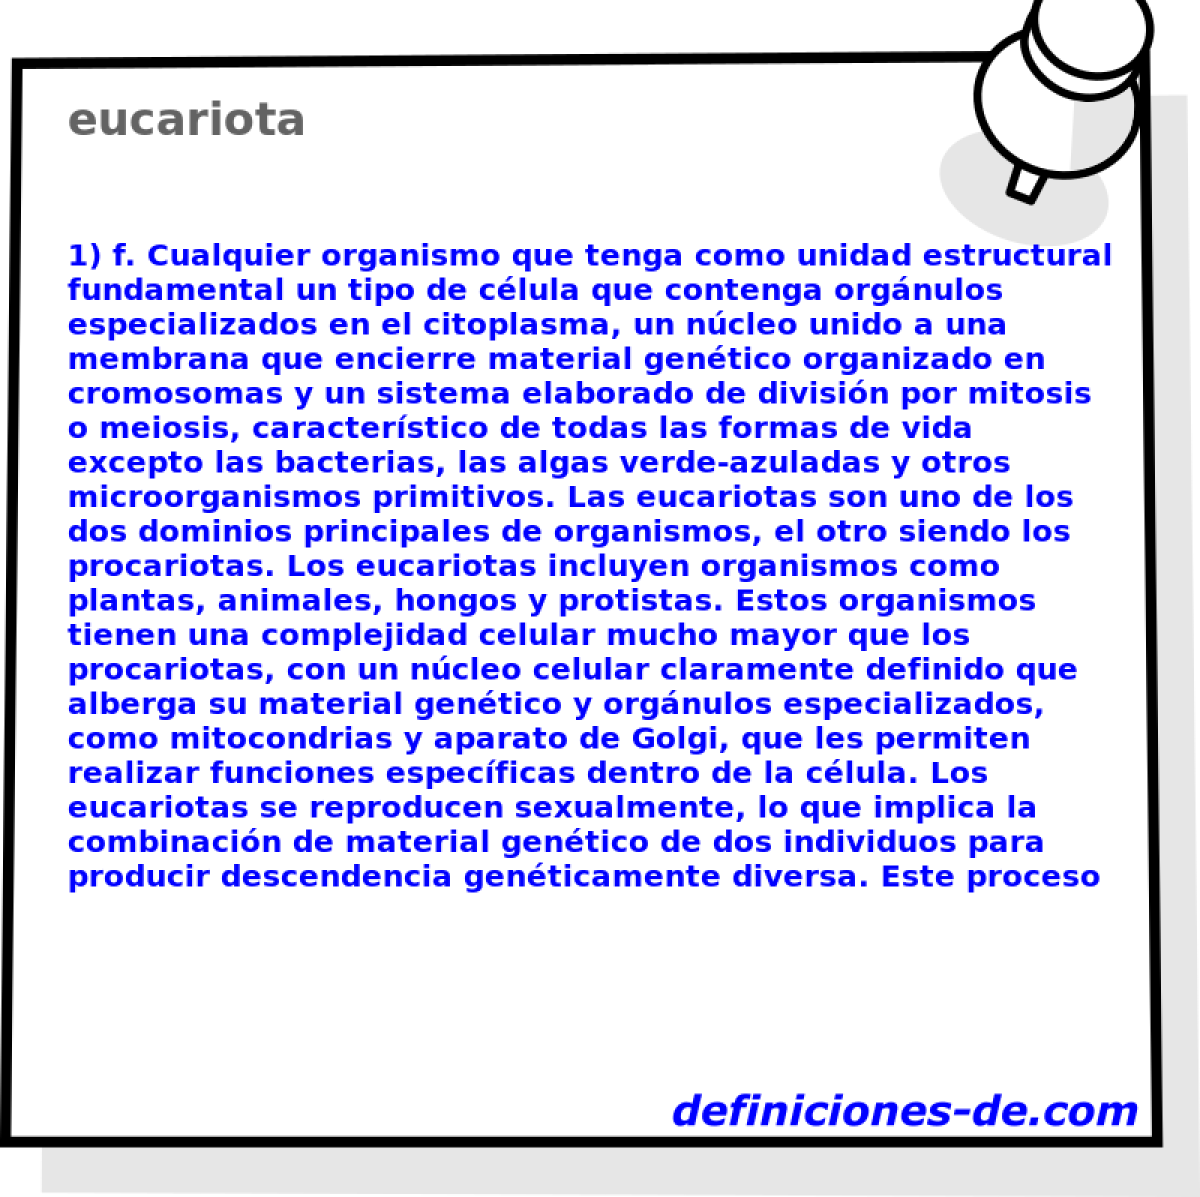 eucariota 